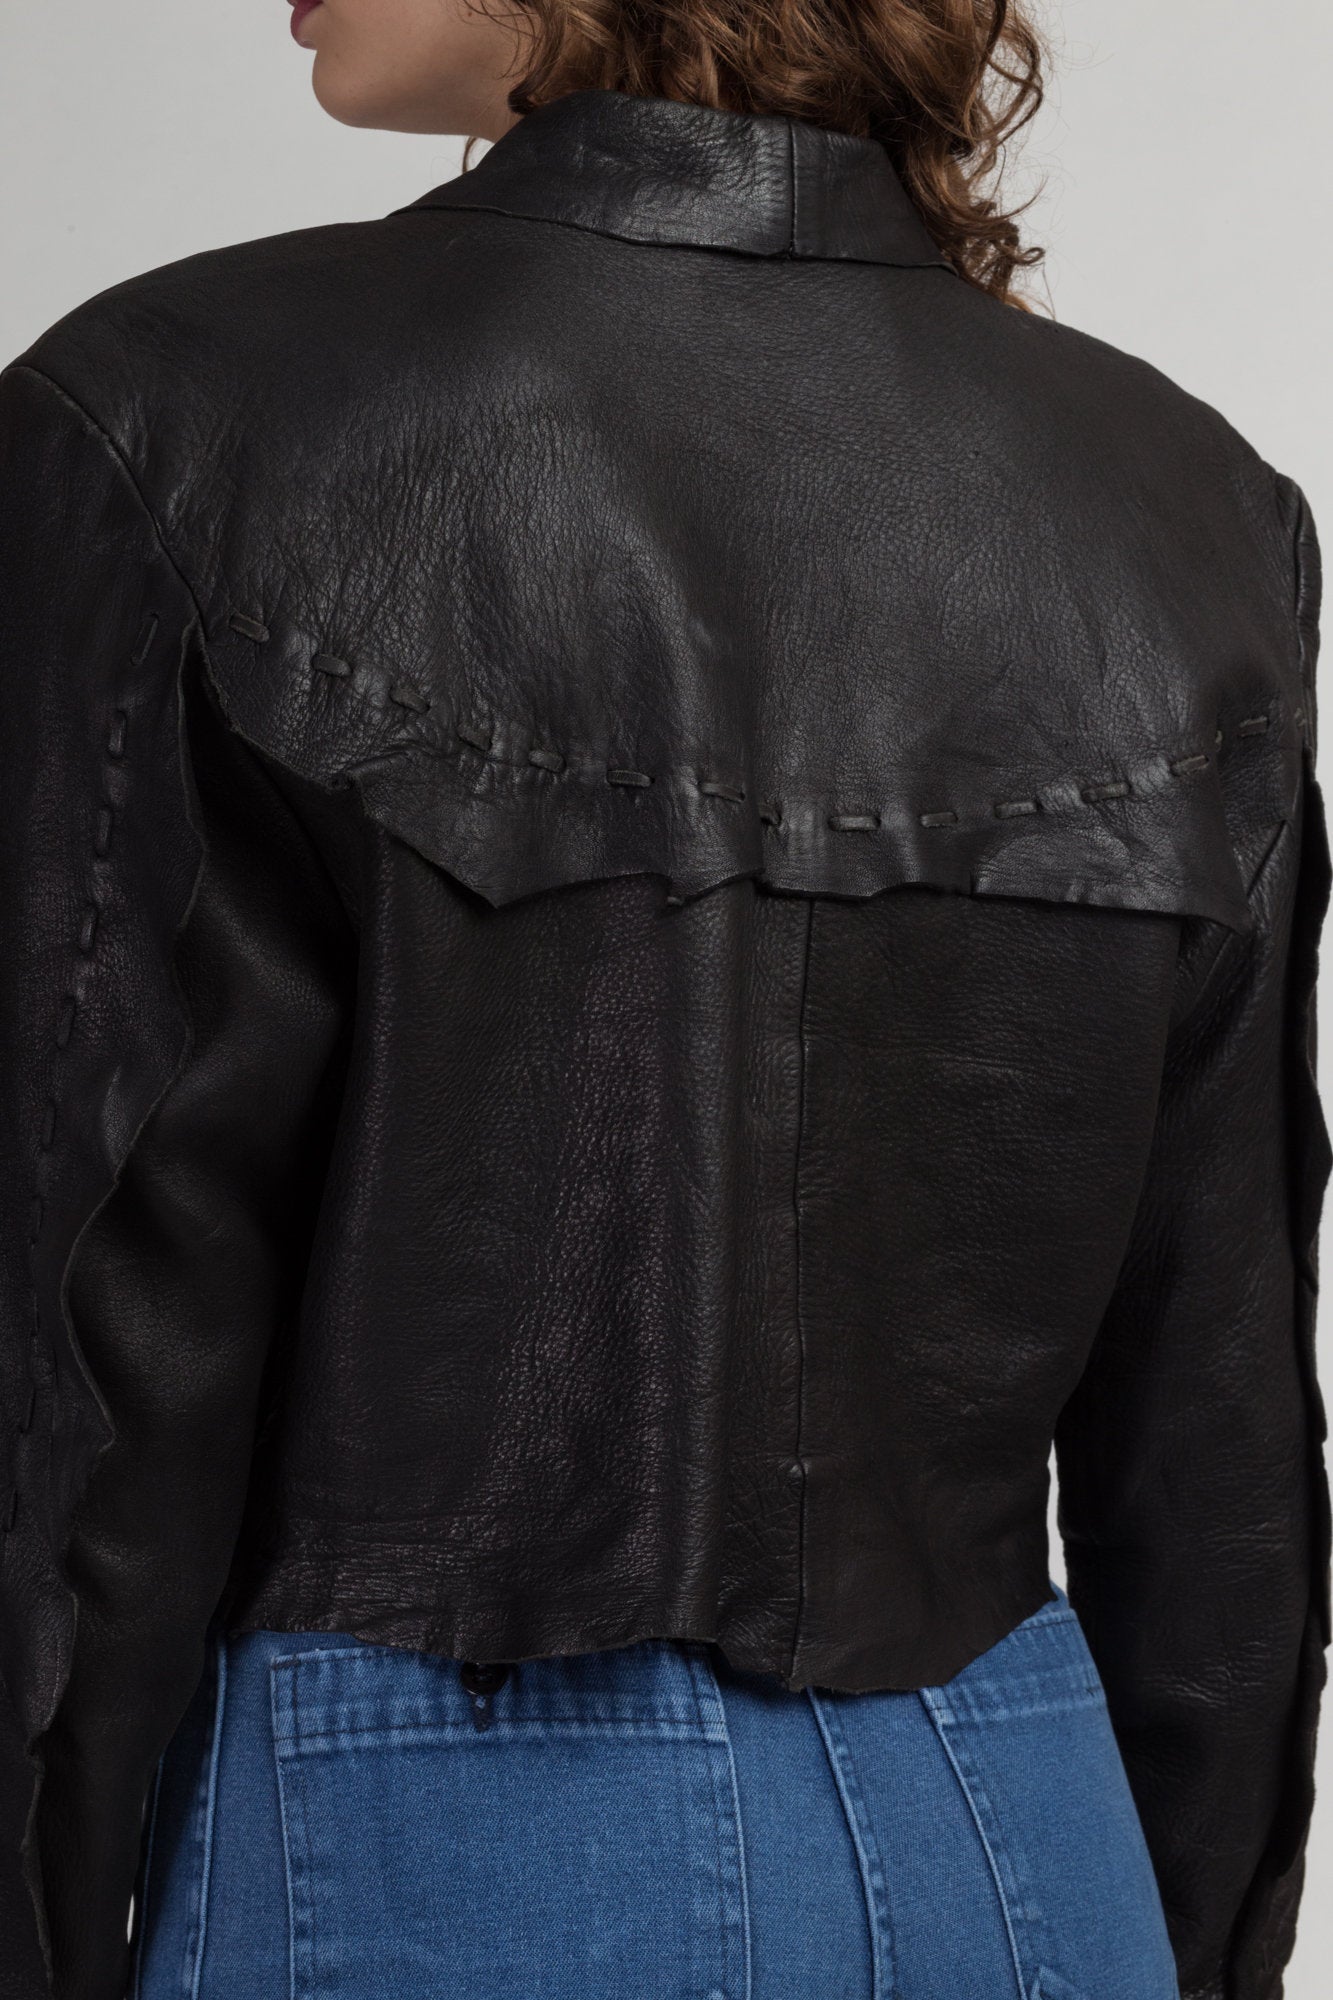 90s Zephyr Unlimited Raw Edge Cropped Leather Jacket - Medium | Vintage Black Southwestern Silver Button Up Biker Coat